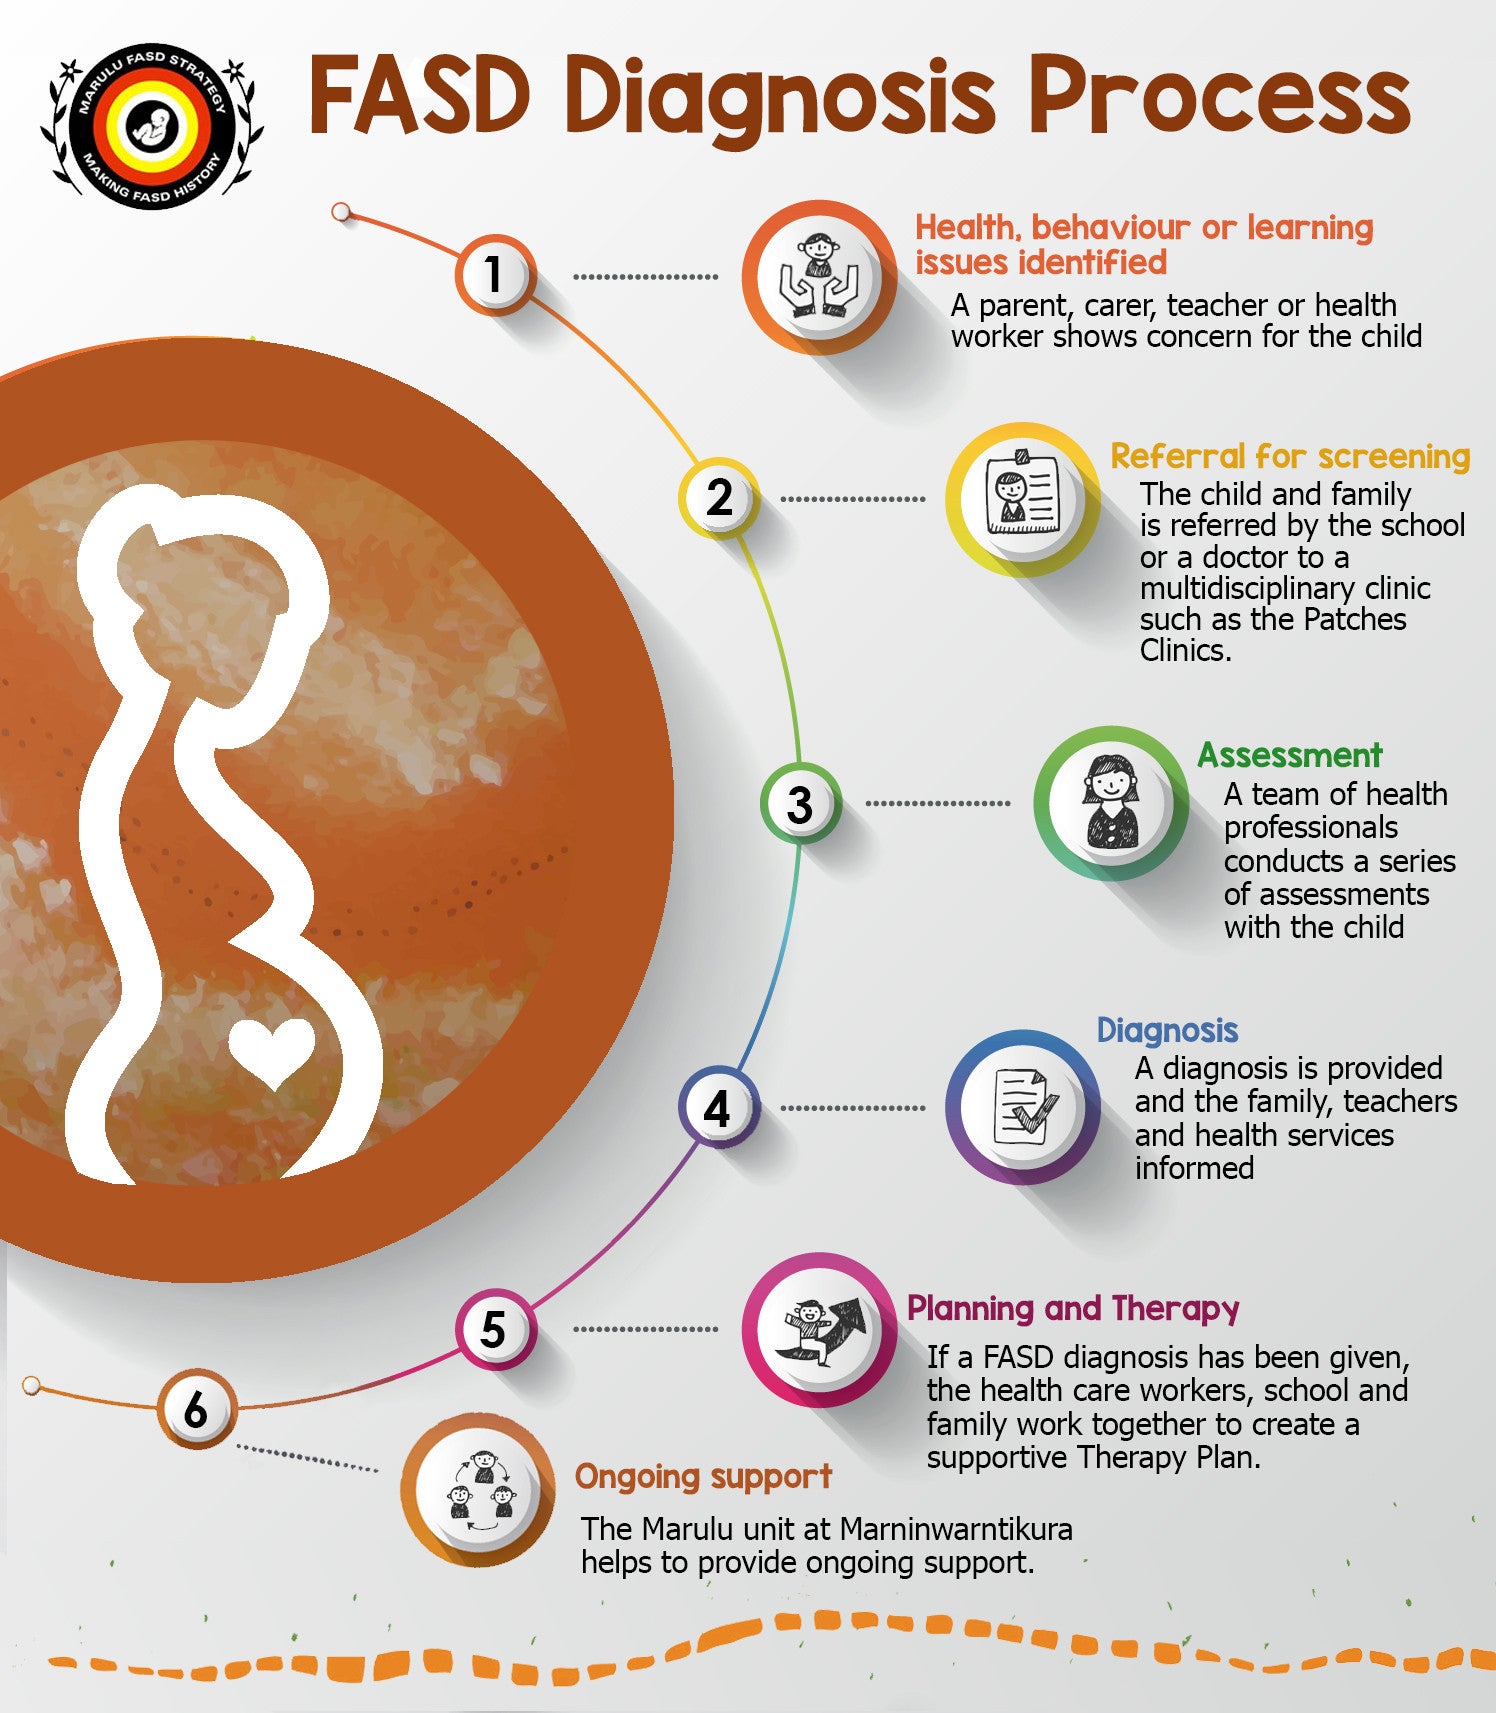 FASD Diagnosis Process graphic